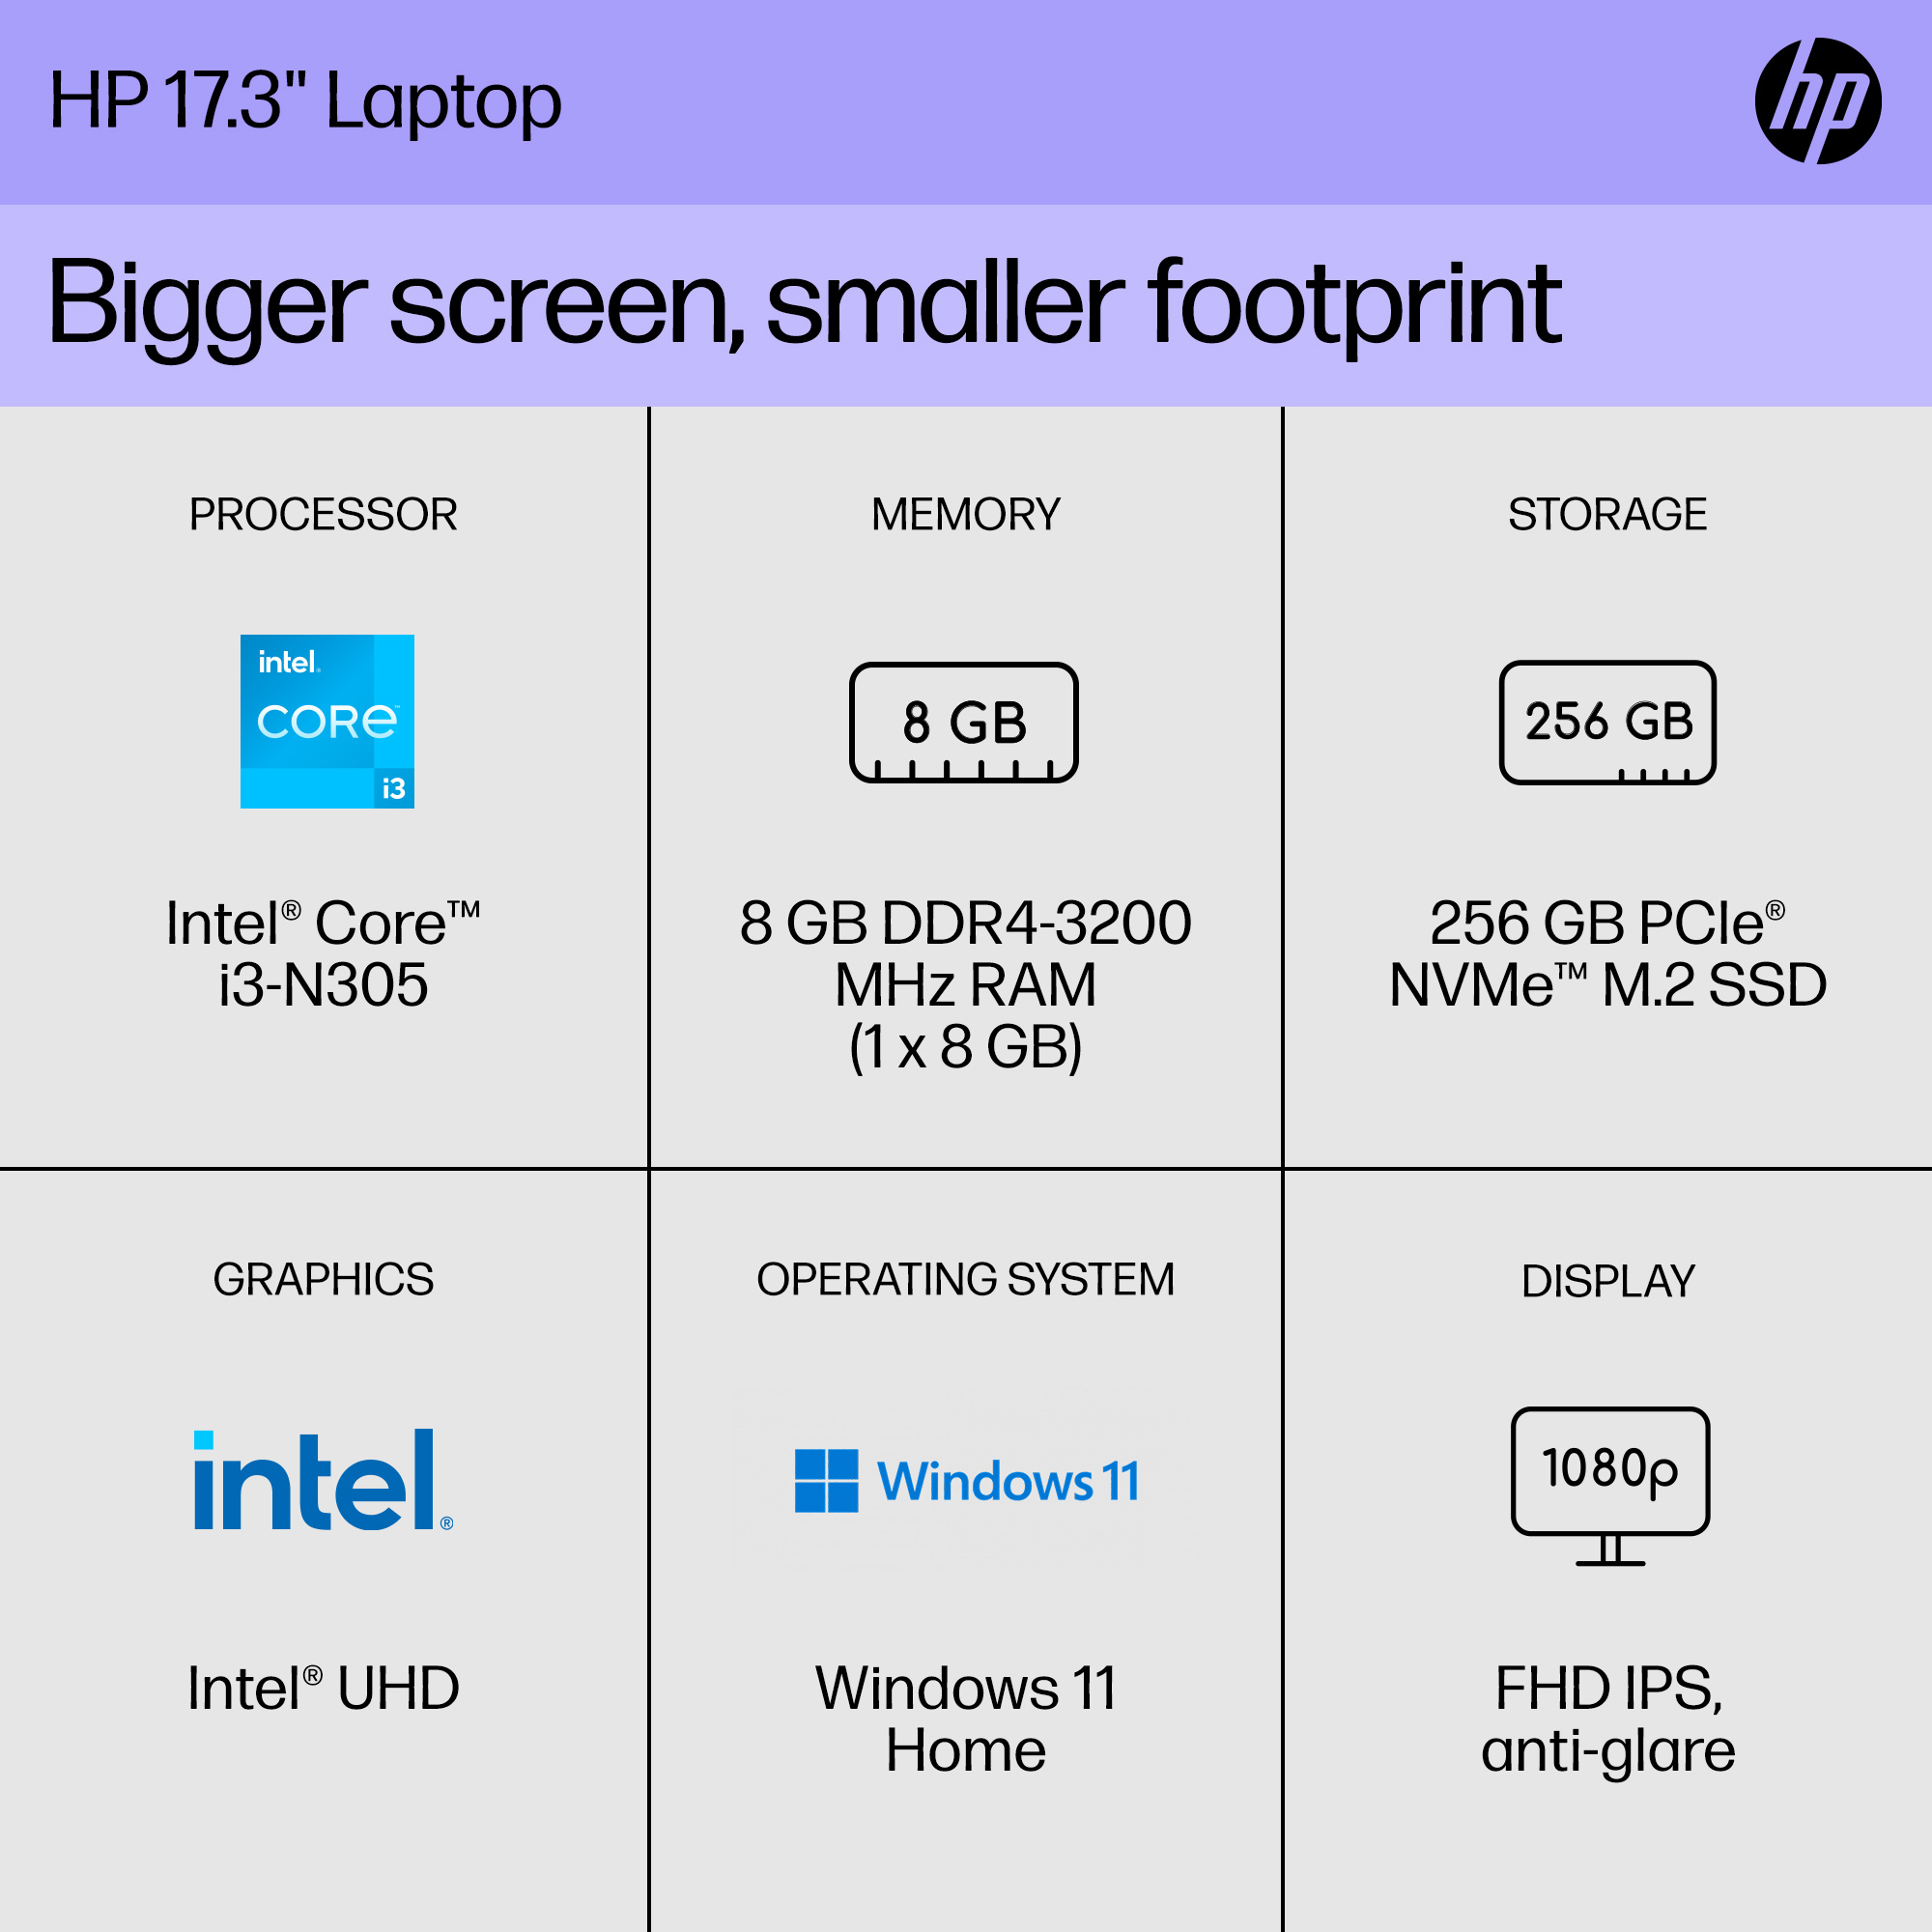 HP 17.3" FHD Laptop, Intel Core i3-N305, 8GB RAM, 256GB SSD, Windows 11 Home, 17-cn3034wm - image 2 of 11